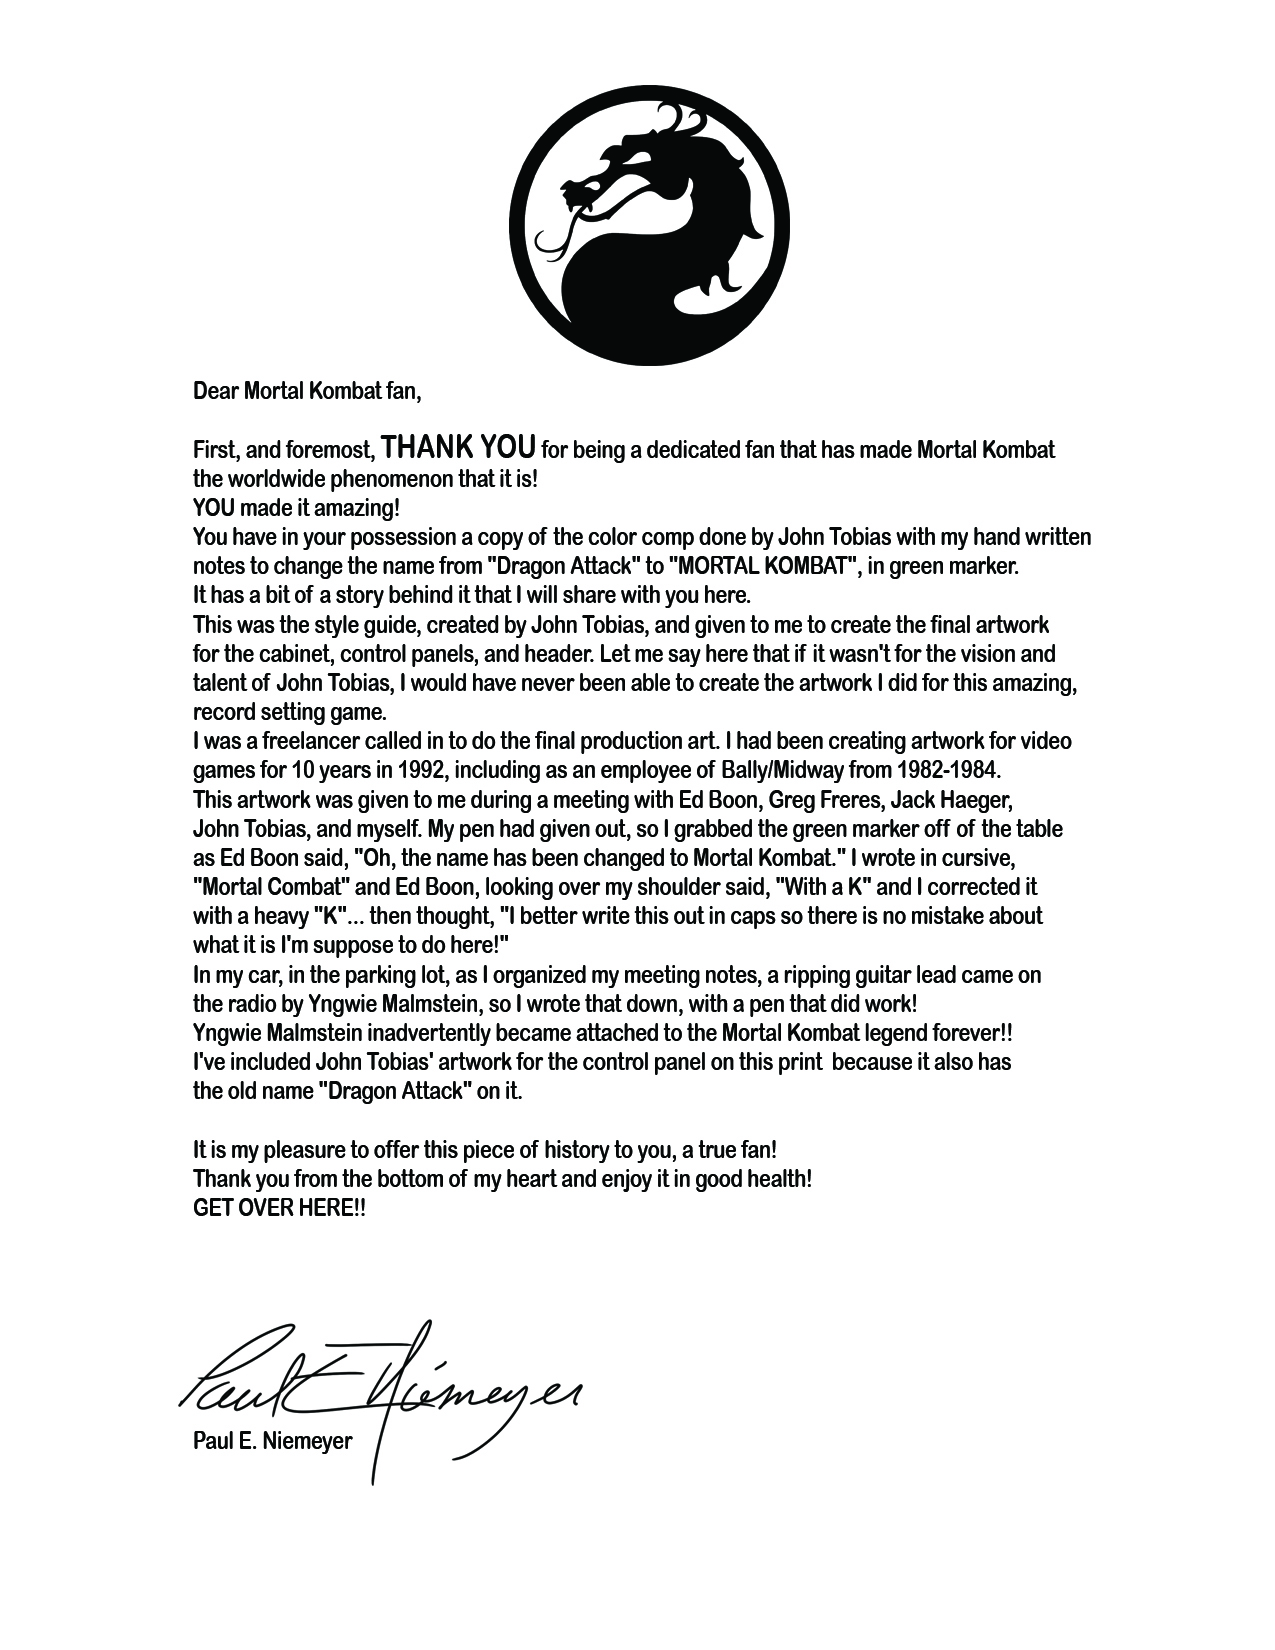 Mortal Kombat letter